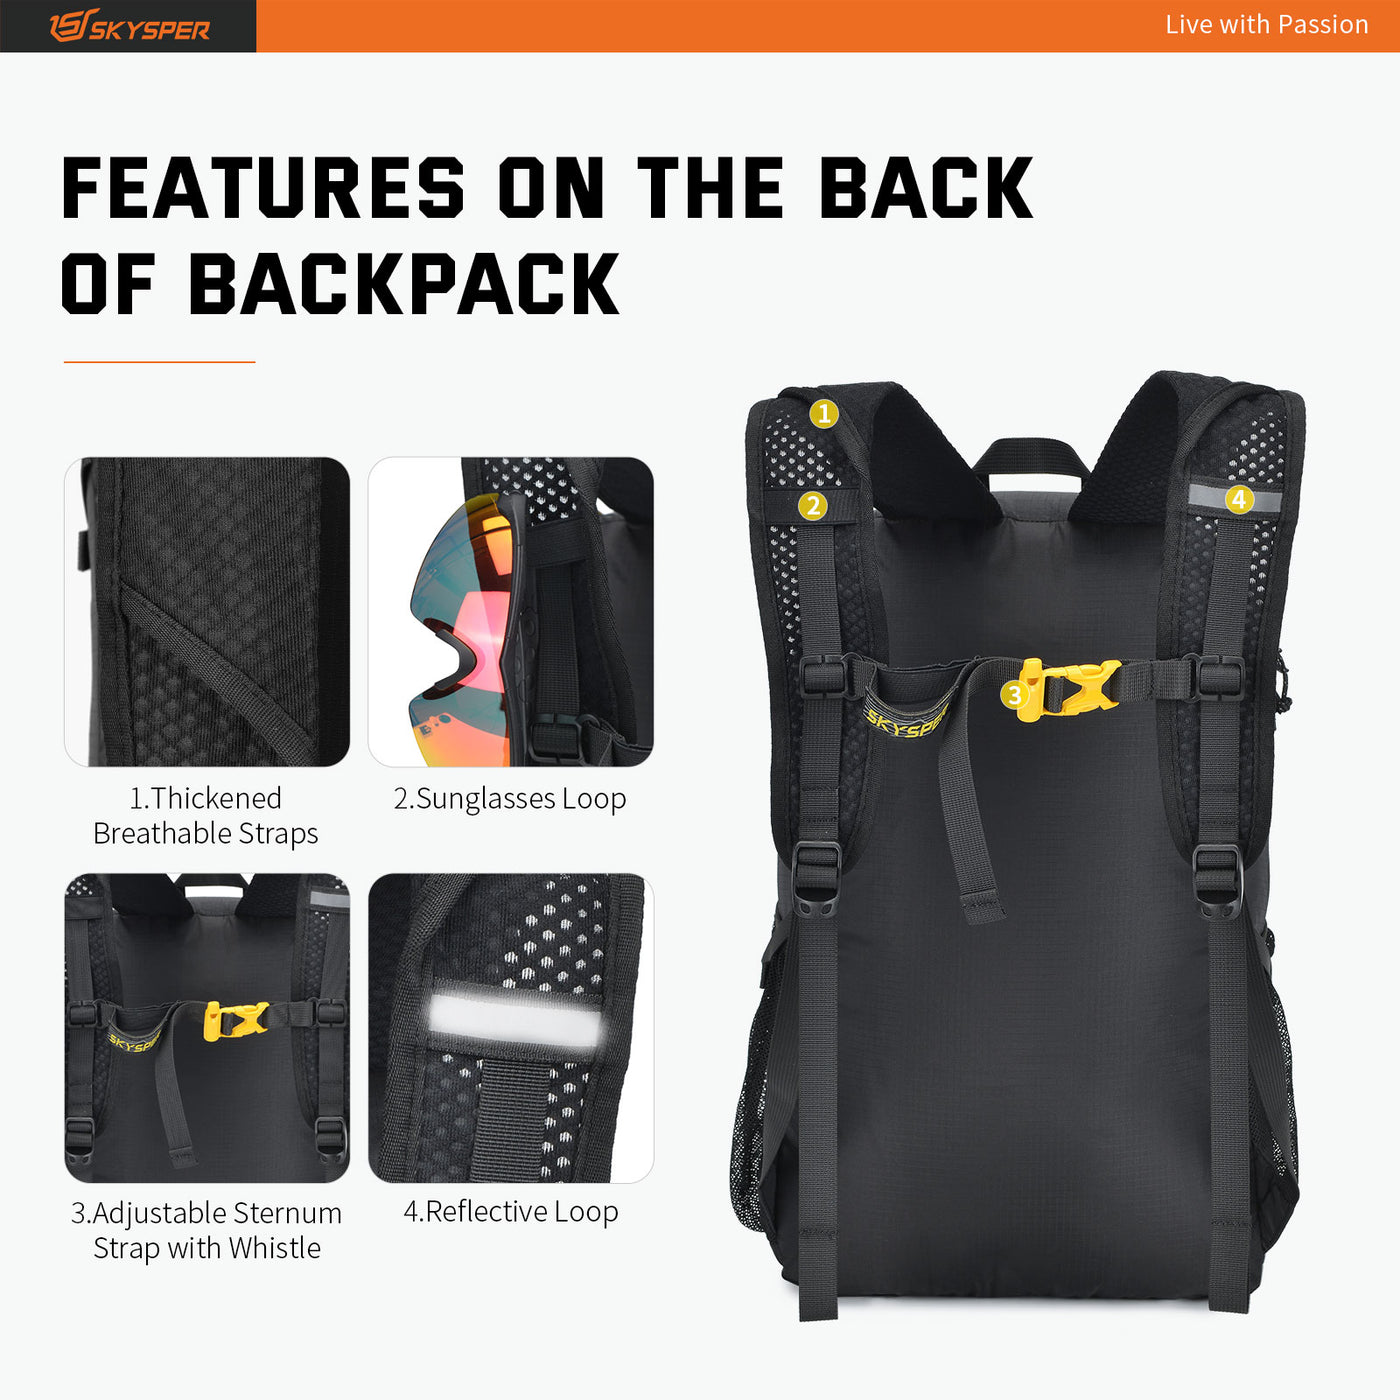 ISHELL30-II - SKYSPER 30L Lightweight Packable Backpack